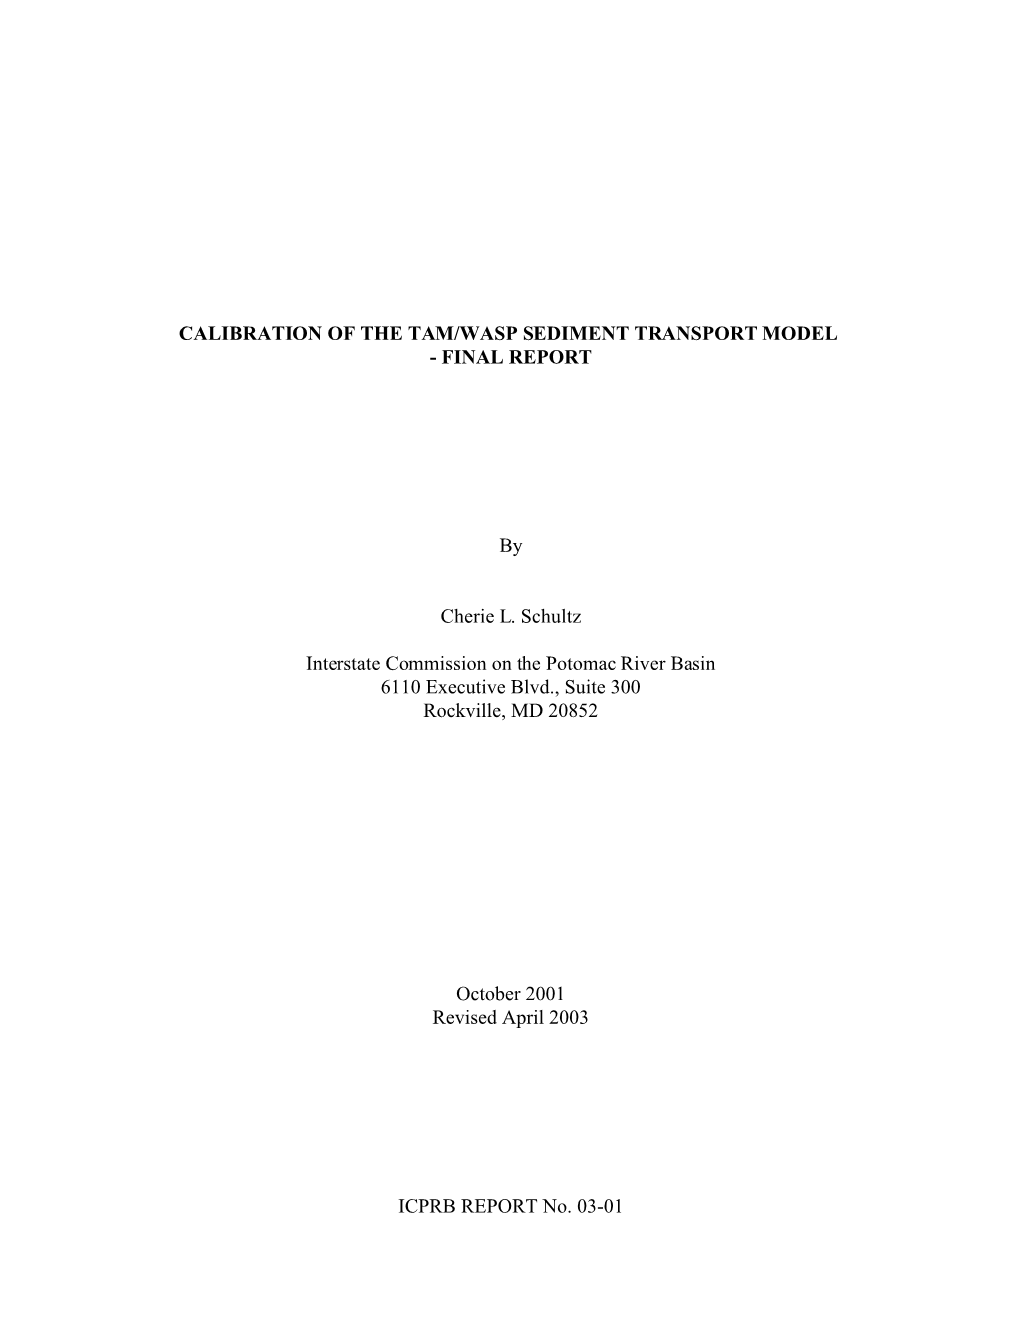 Calibration of the Tam/Wasp Sediment Transport Model - Final Report